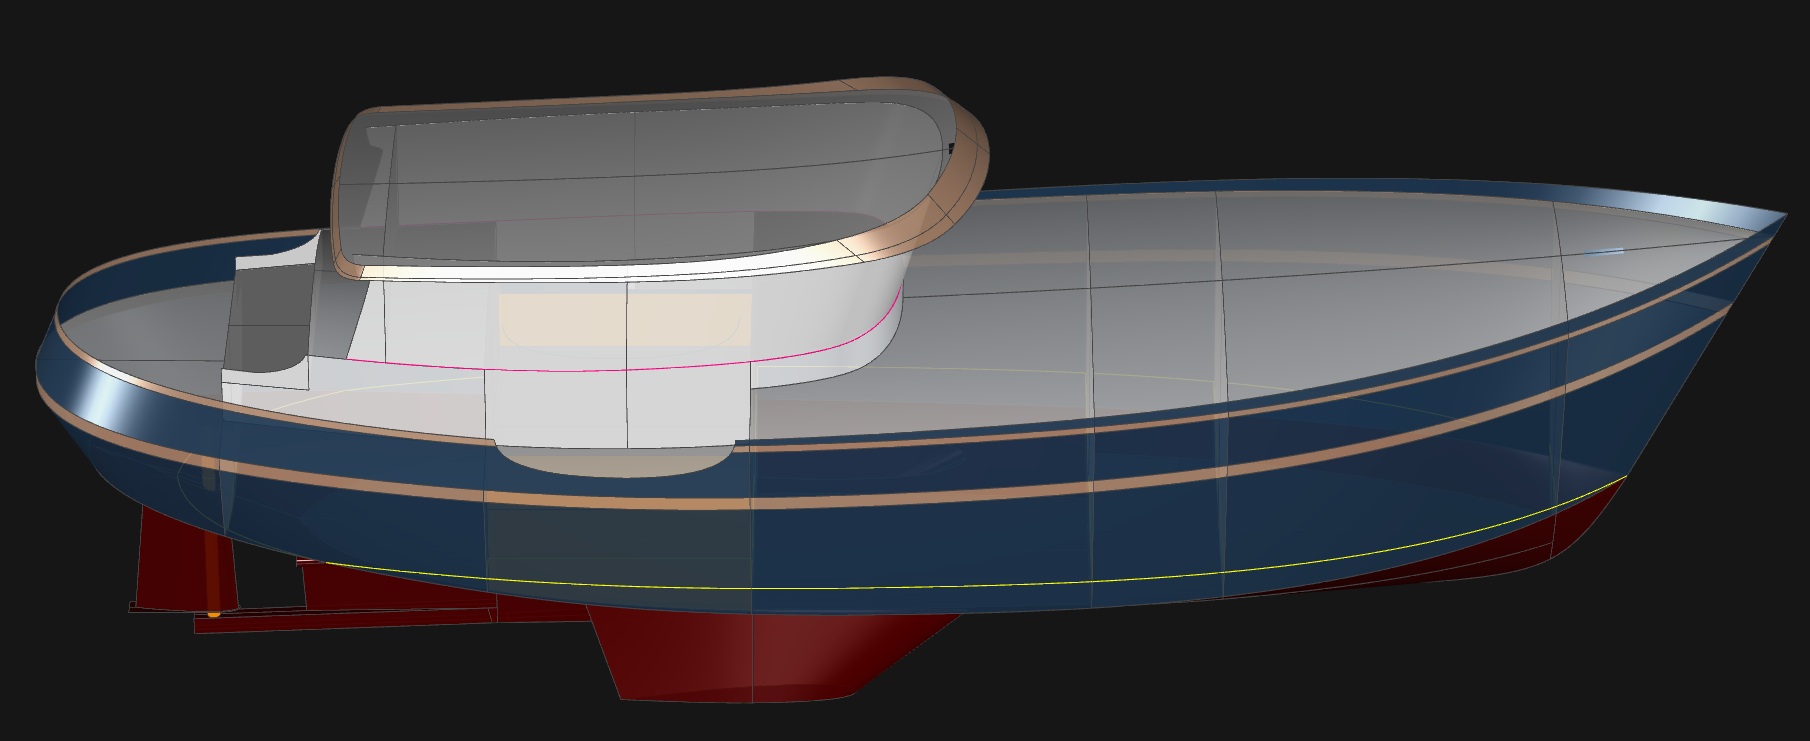 Far Horizon 46 - A Trawler Yacht by Kasten Marine Design, Inc.